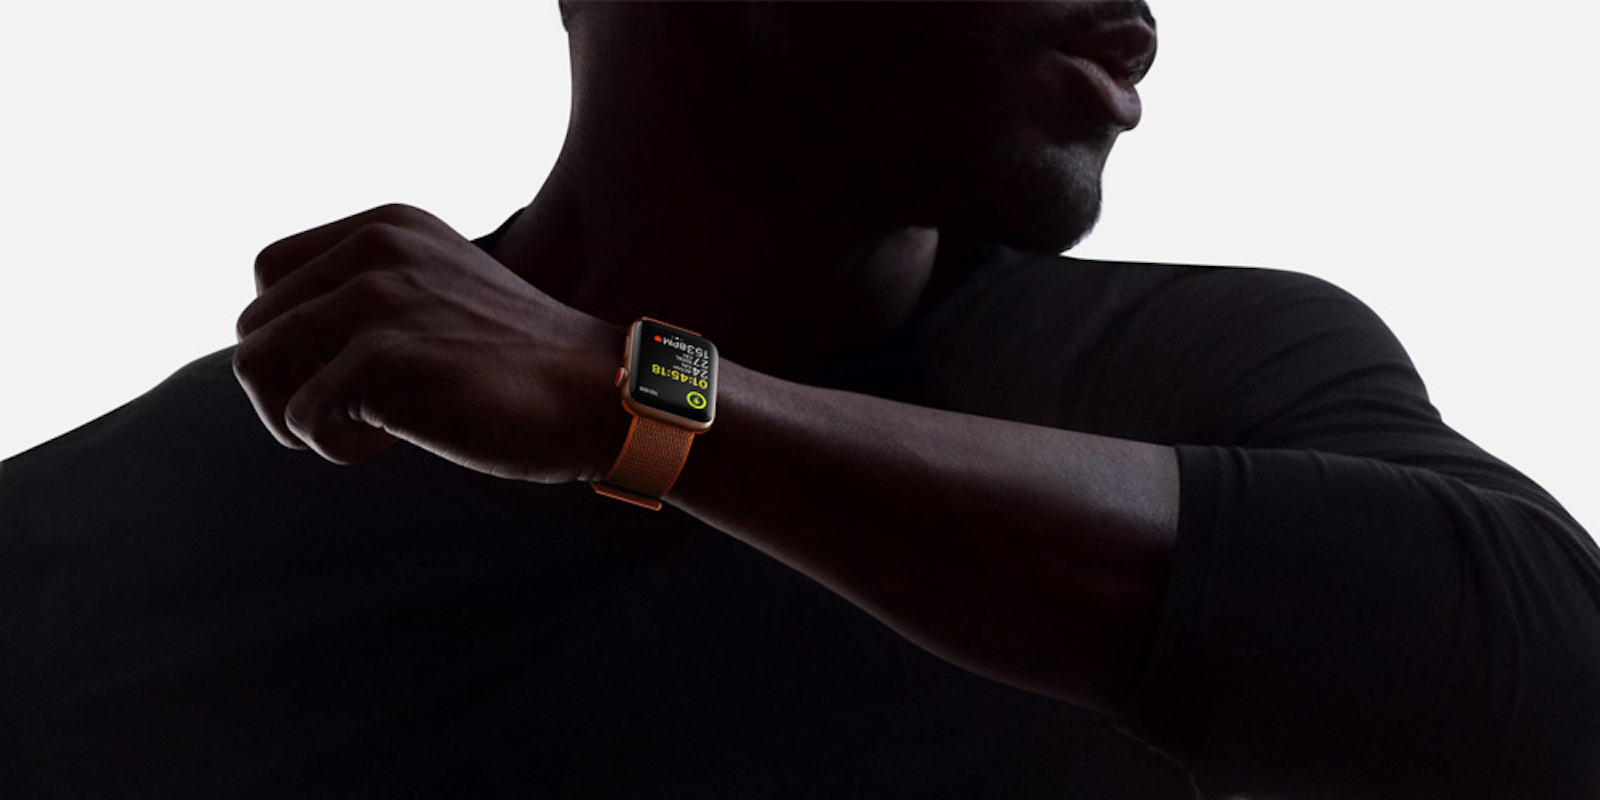 Apple Watch Series 3 on man's wrist